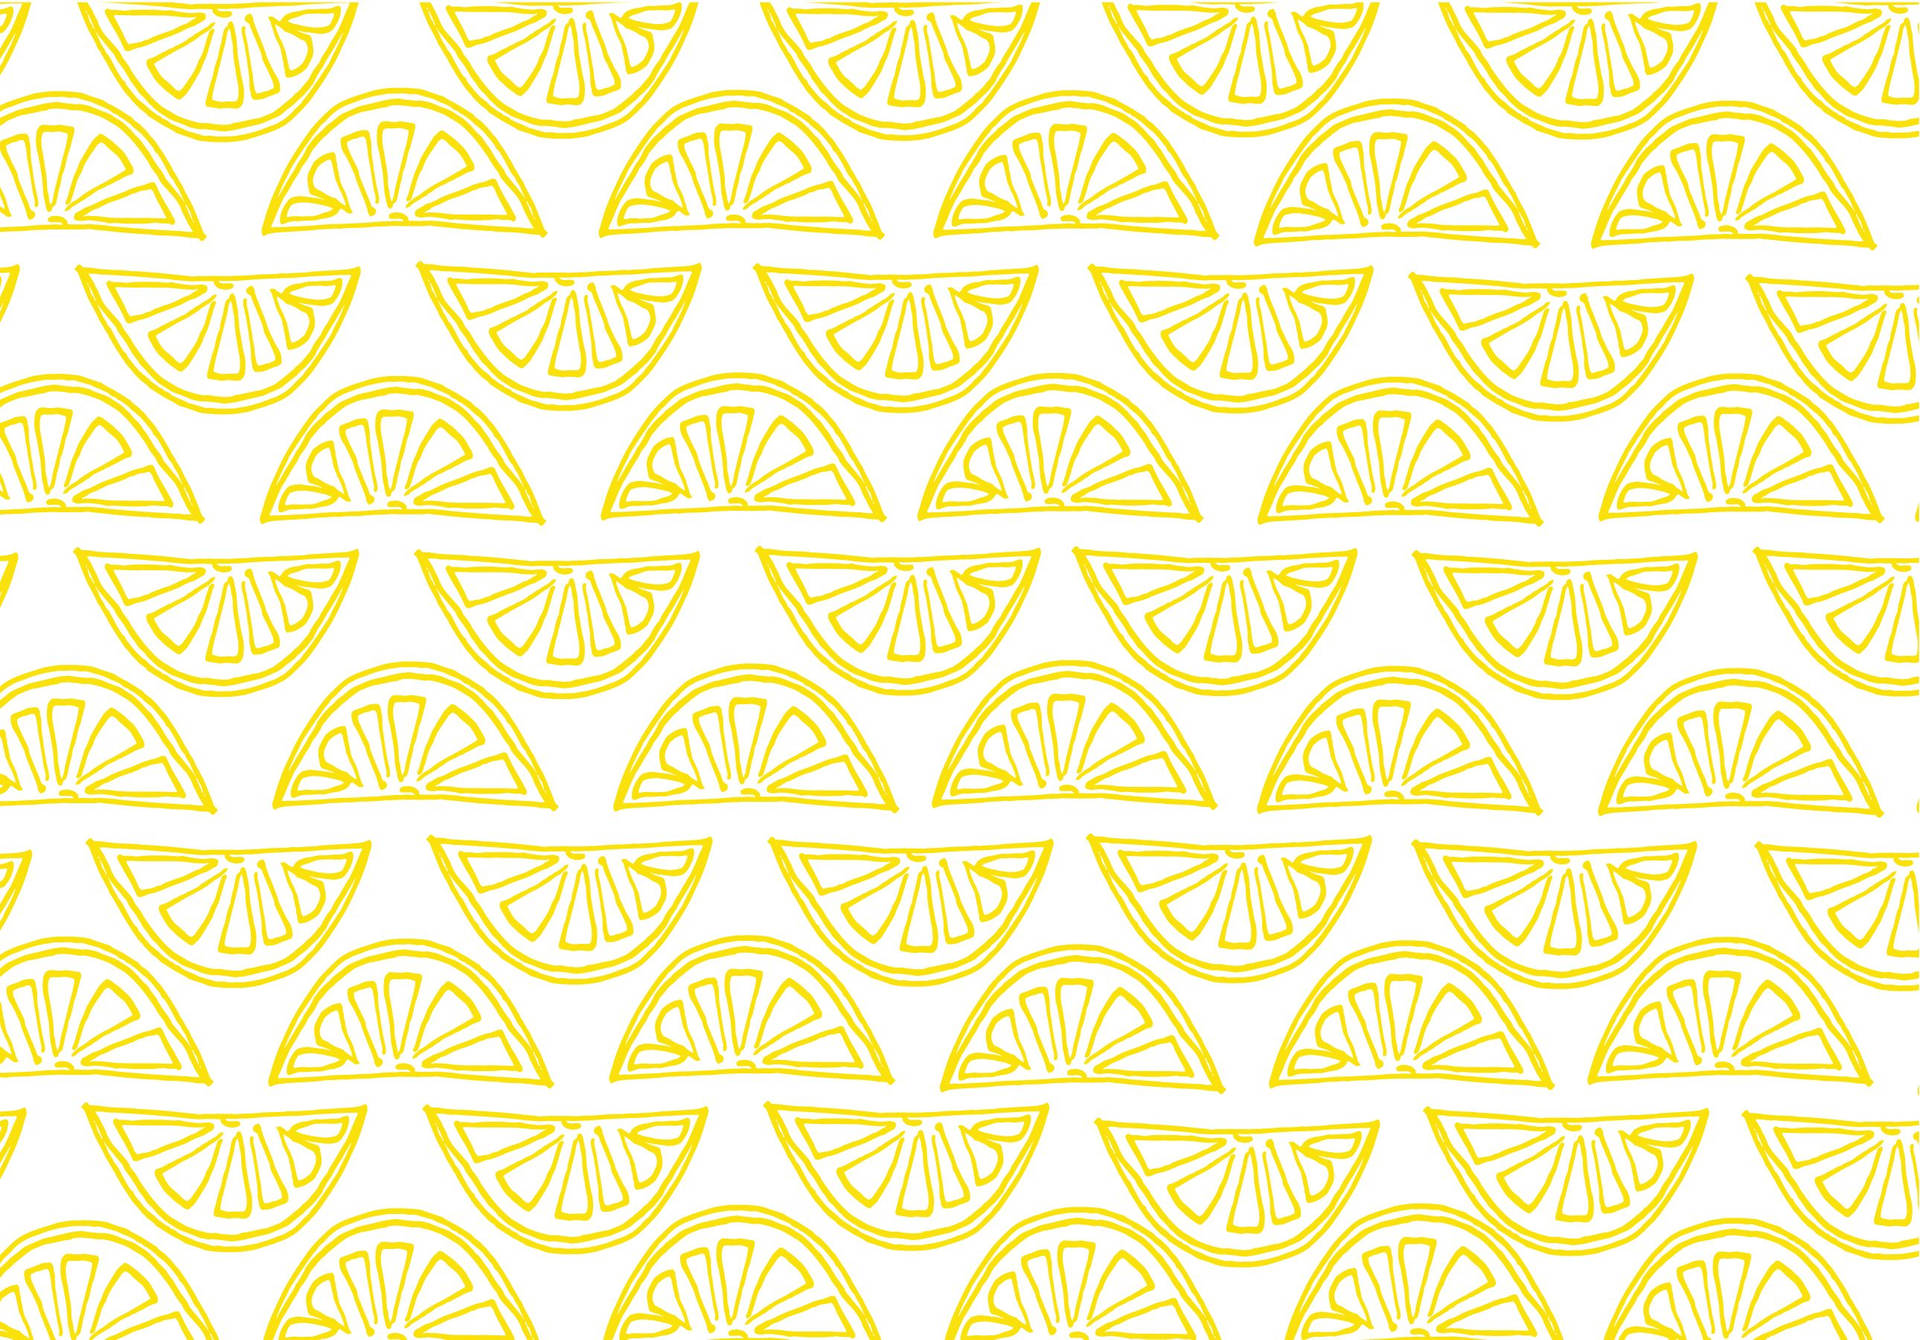 Lemon 2580X1800 Wallpaper and Background Image